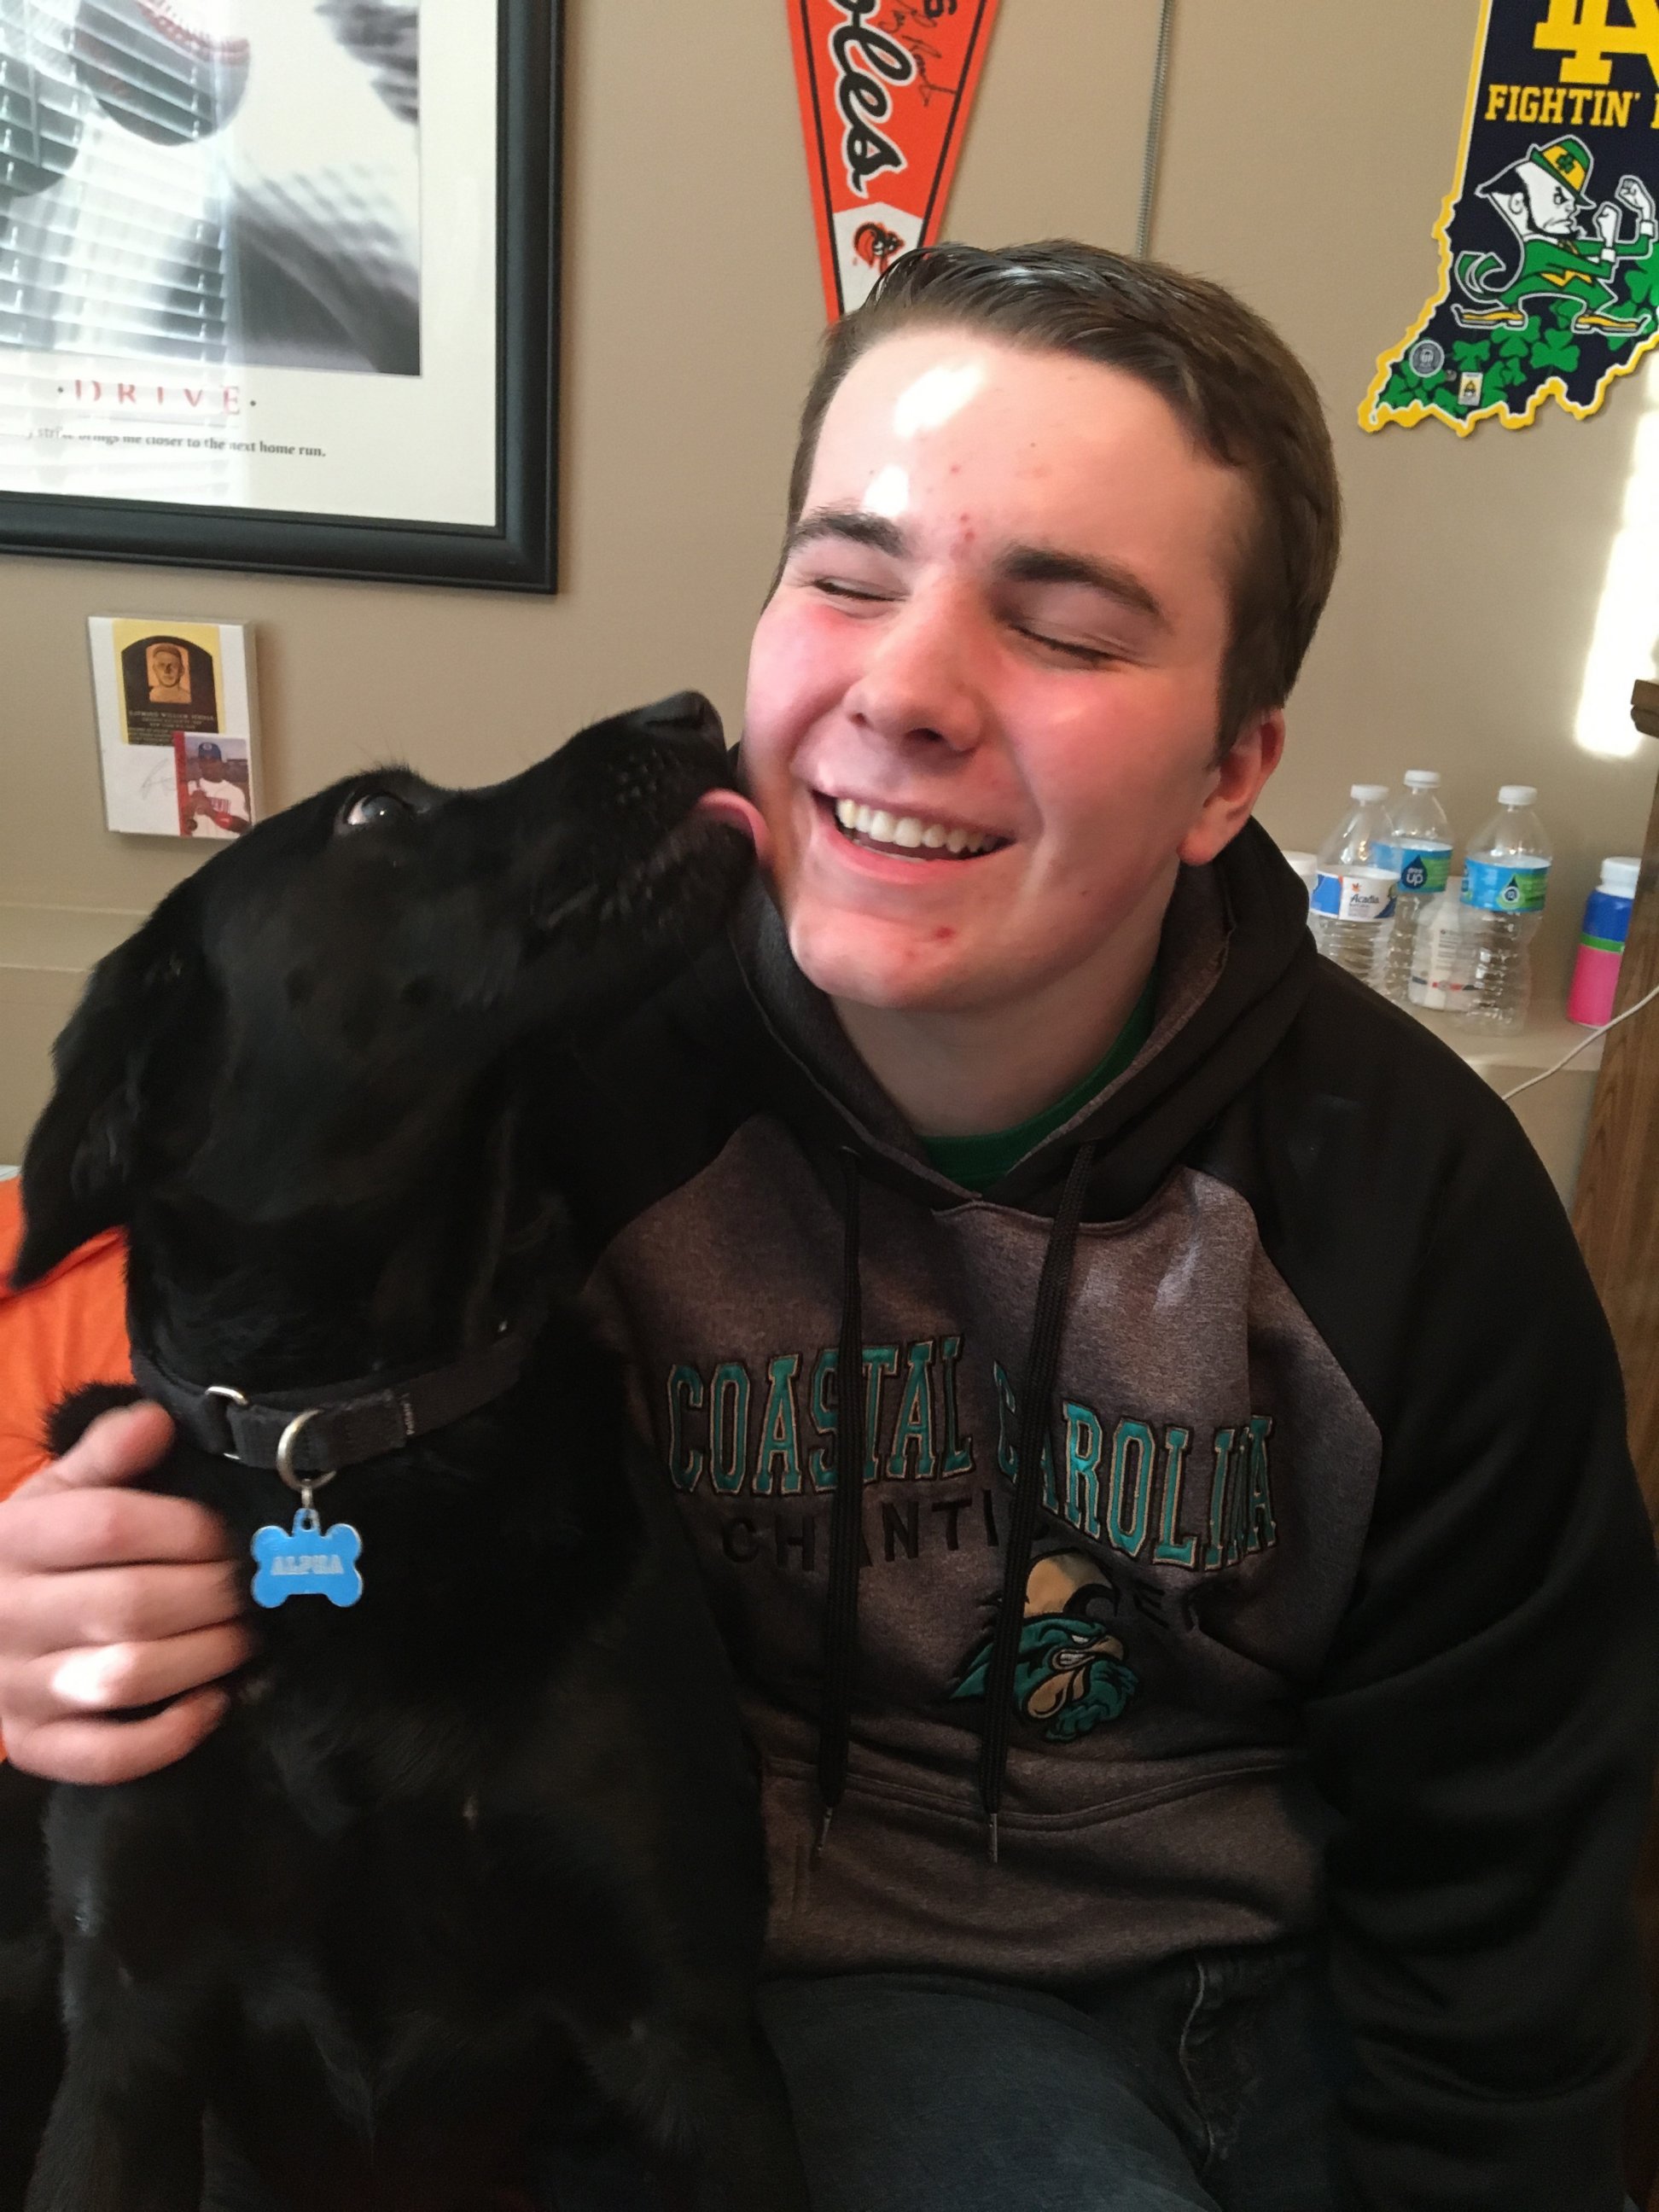 PHOTO: AJ" Schalk, a junior at Stafford High School in Fredericksburg, Va., attends school with his service dog, Alpha.
